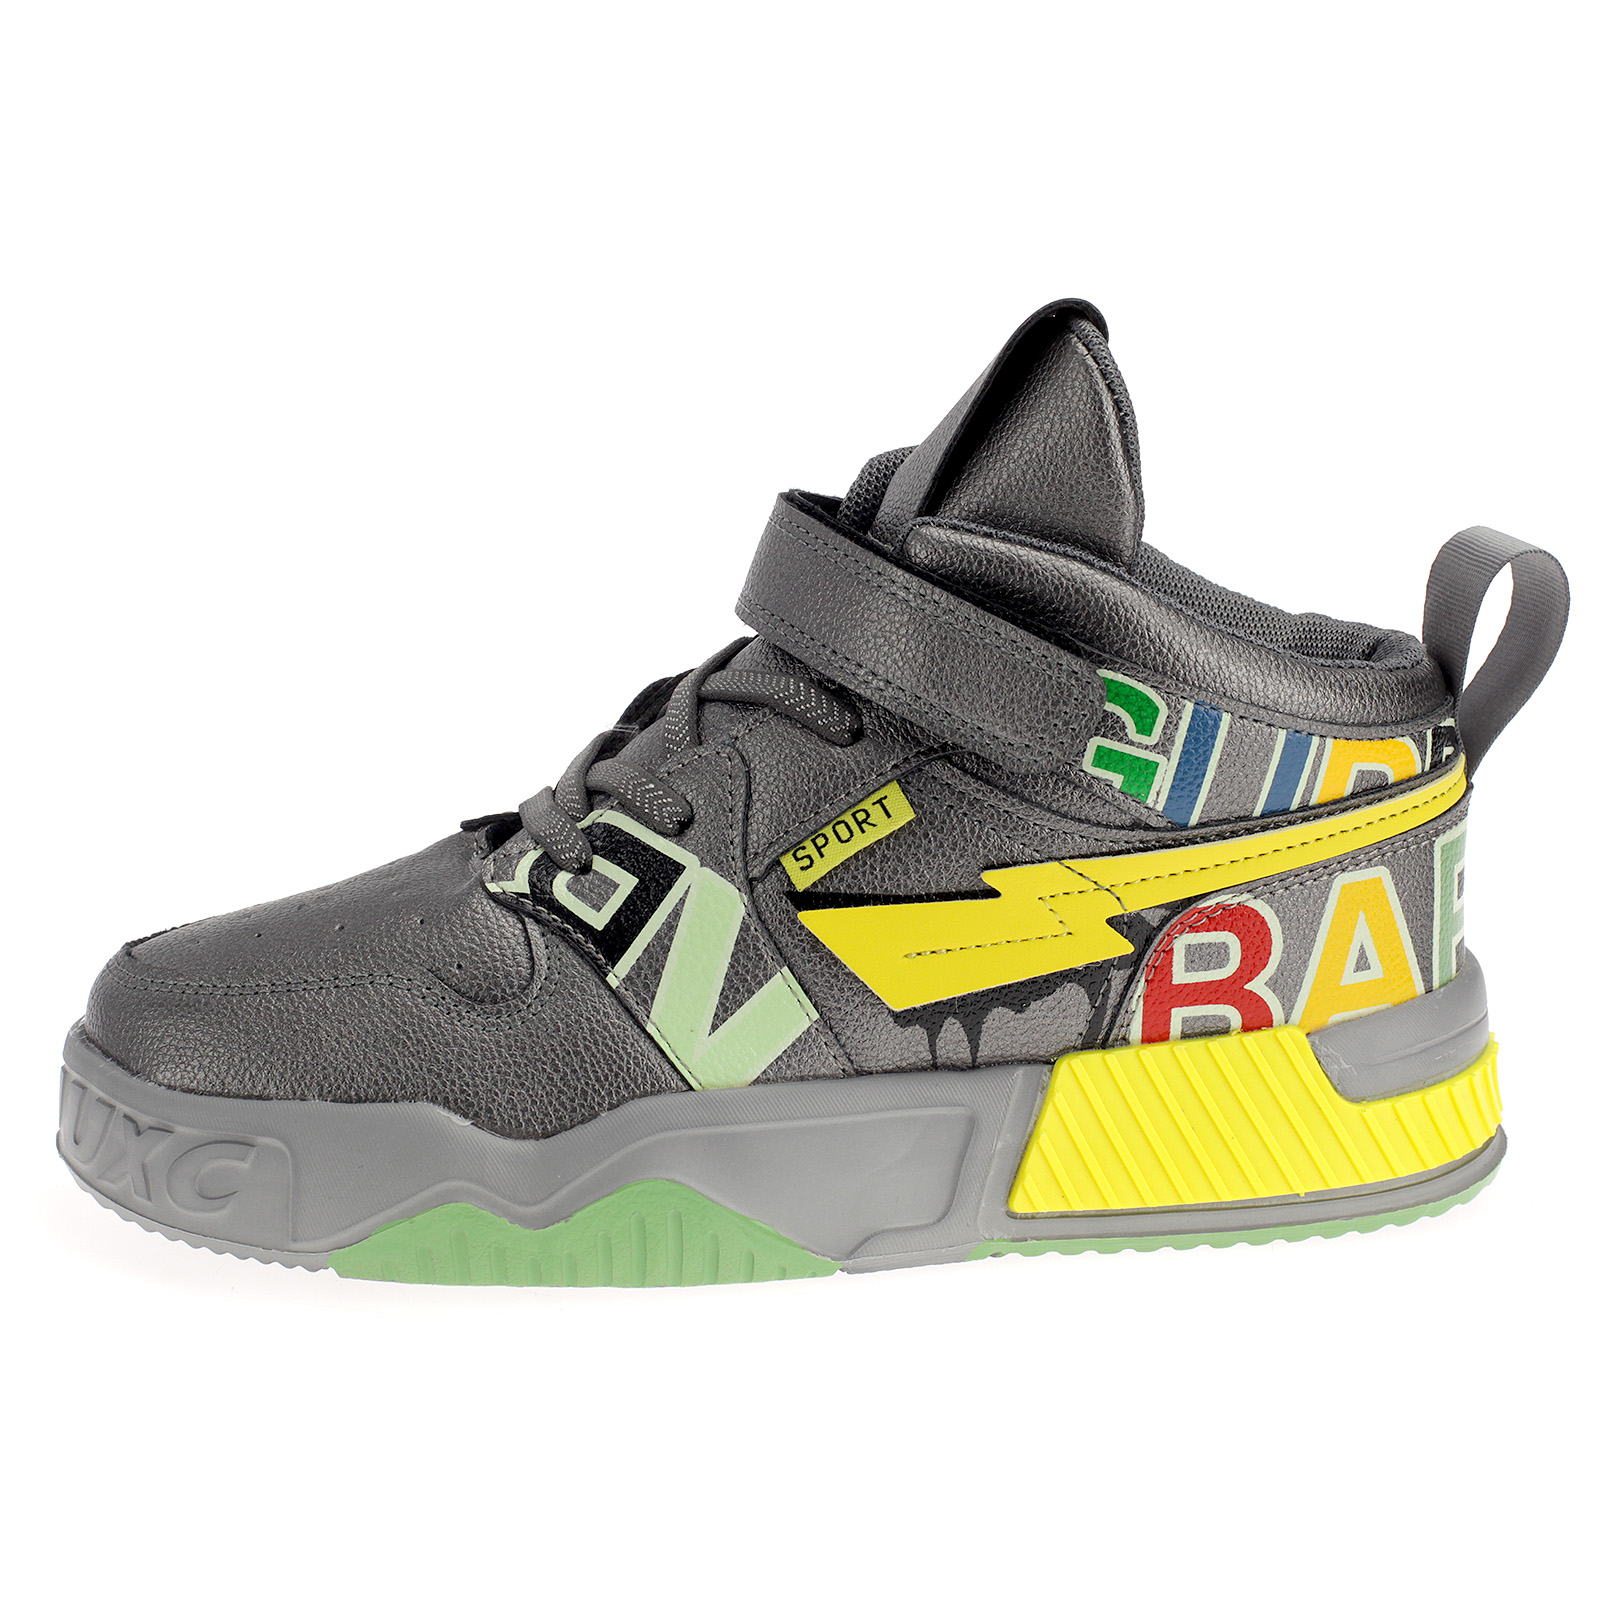 Kinderschuhe Sportschuhe Mid Top Sneaker Freizeit Schuhe 4041